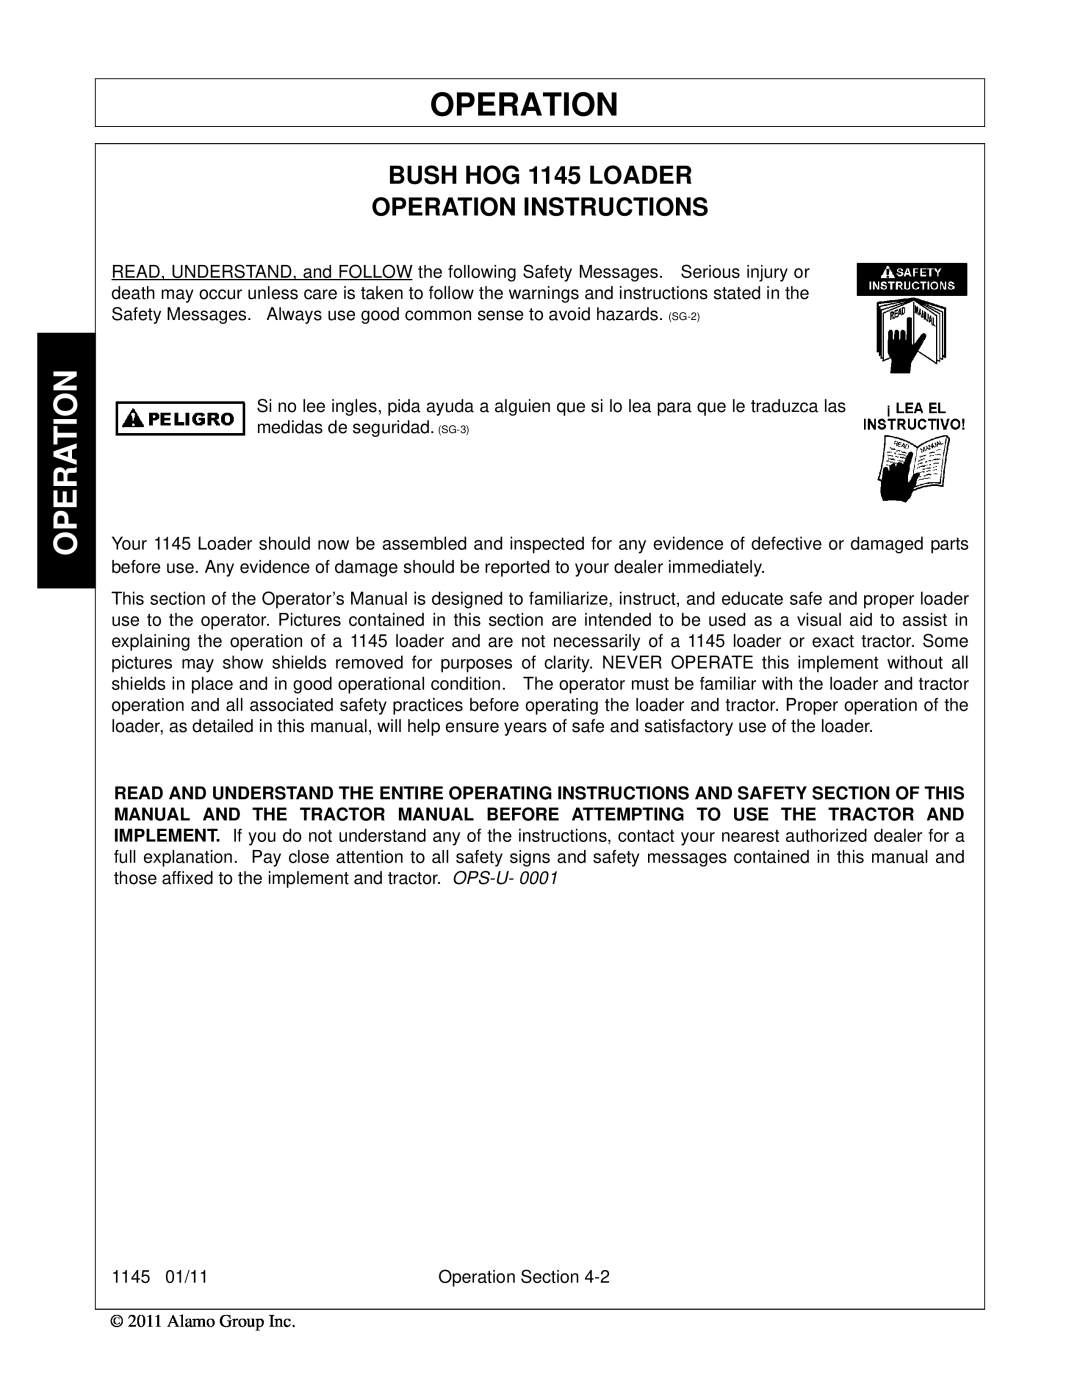 Bush Hog manual Operation, BUSH HOG 1145 LOADER OPERATION INSTRUCTIONS 